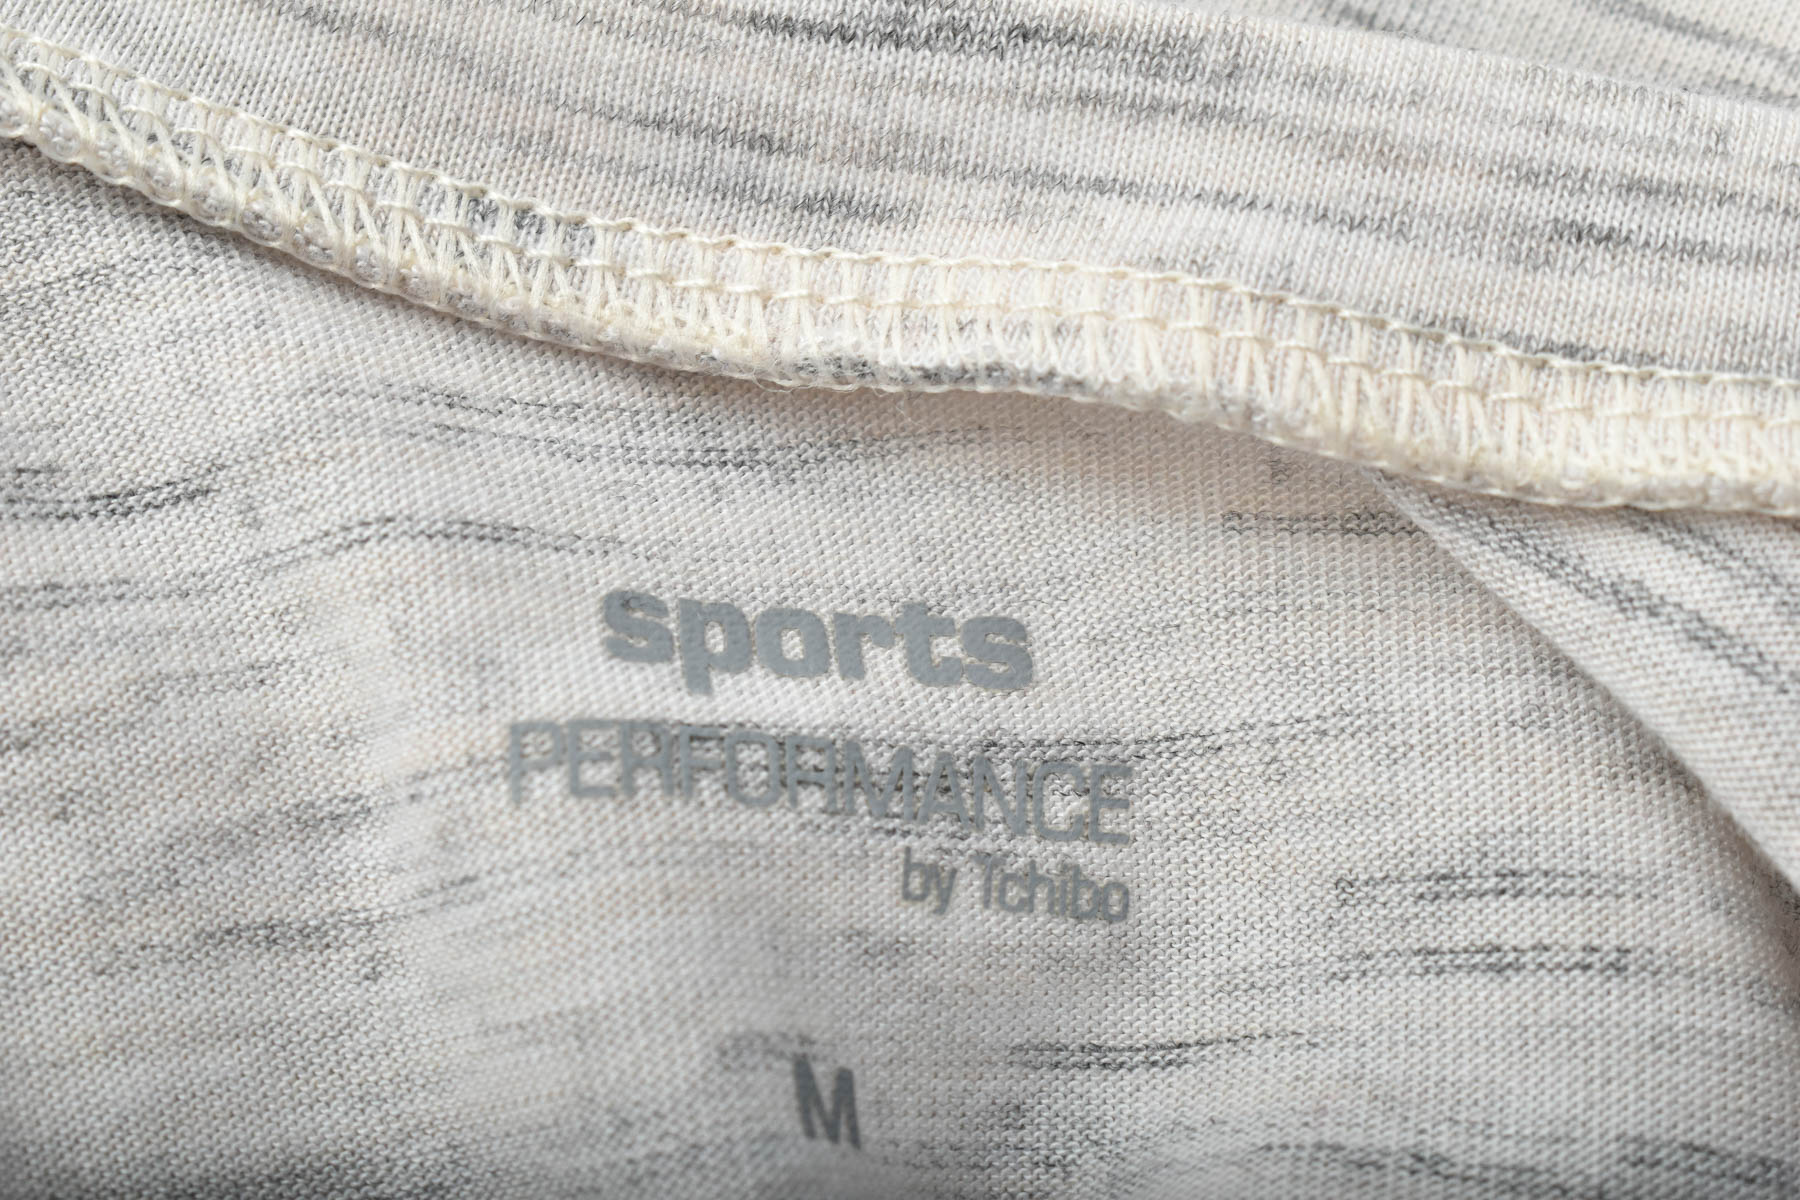 Bluza de damă - Sports PERFORMANCE by Tchibo - 2